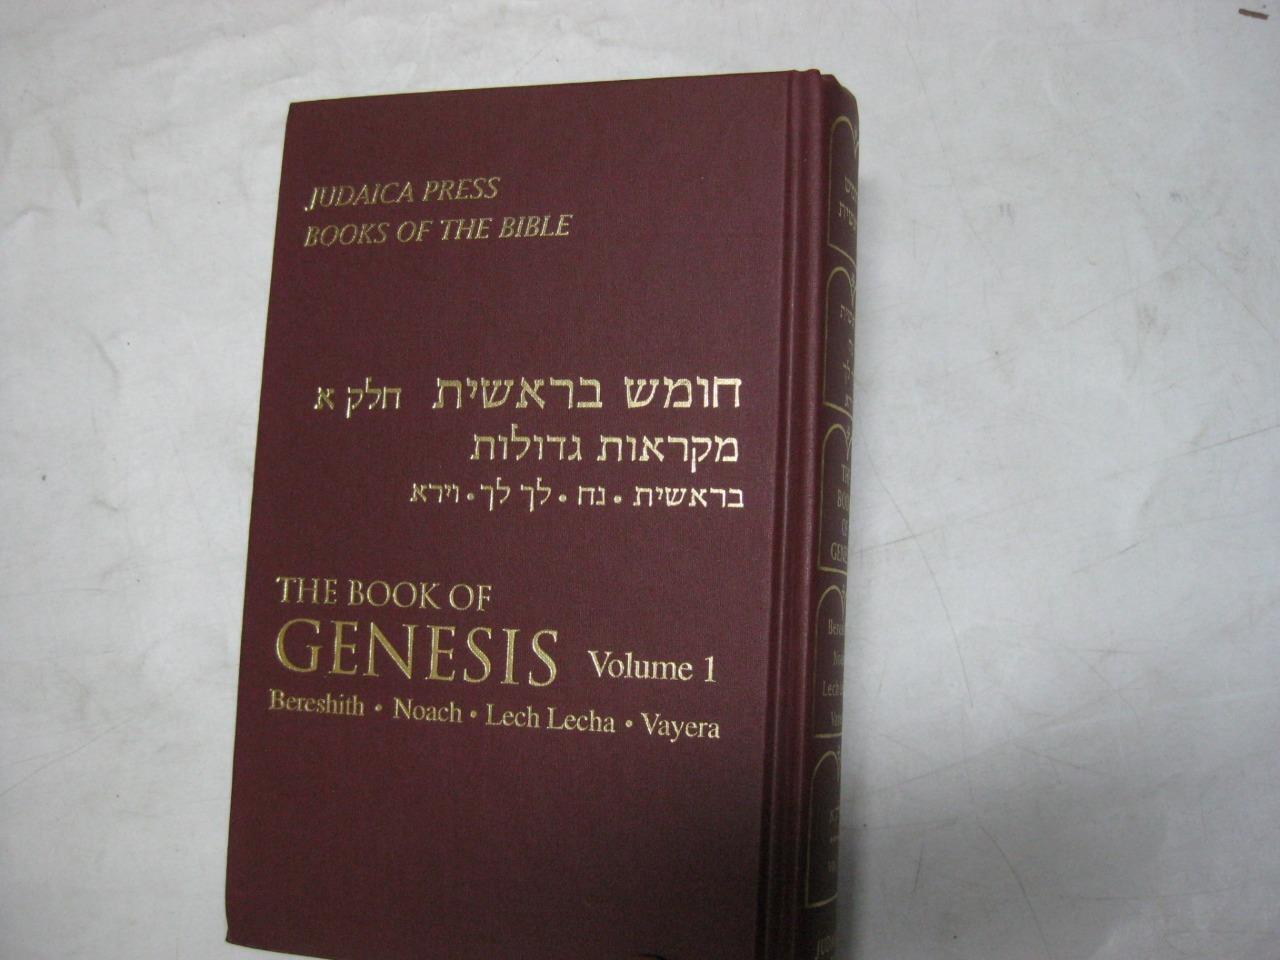 HEBREW-ENGLISH MIKRAOT GEDOLOT BOOK OF GENESIS I Judaica Press Edition of Bible